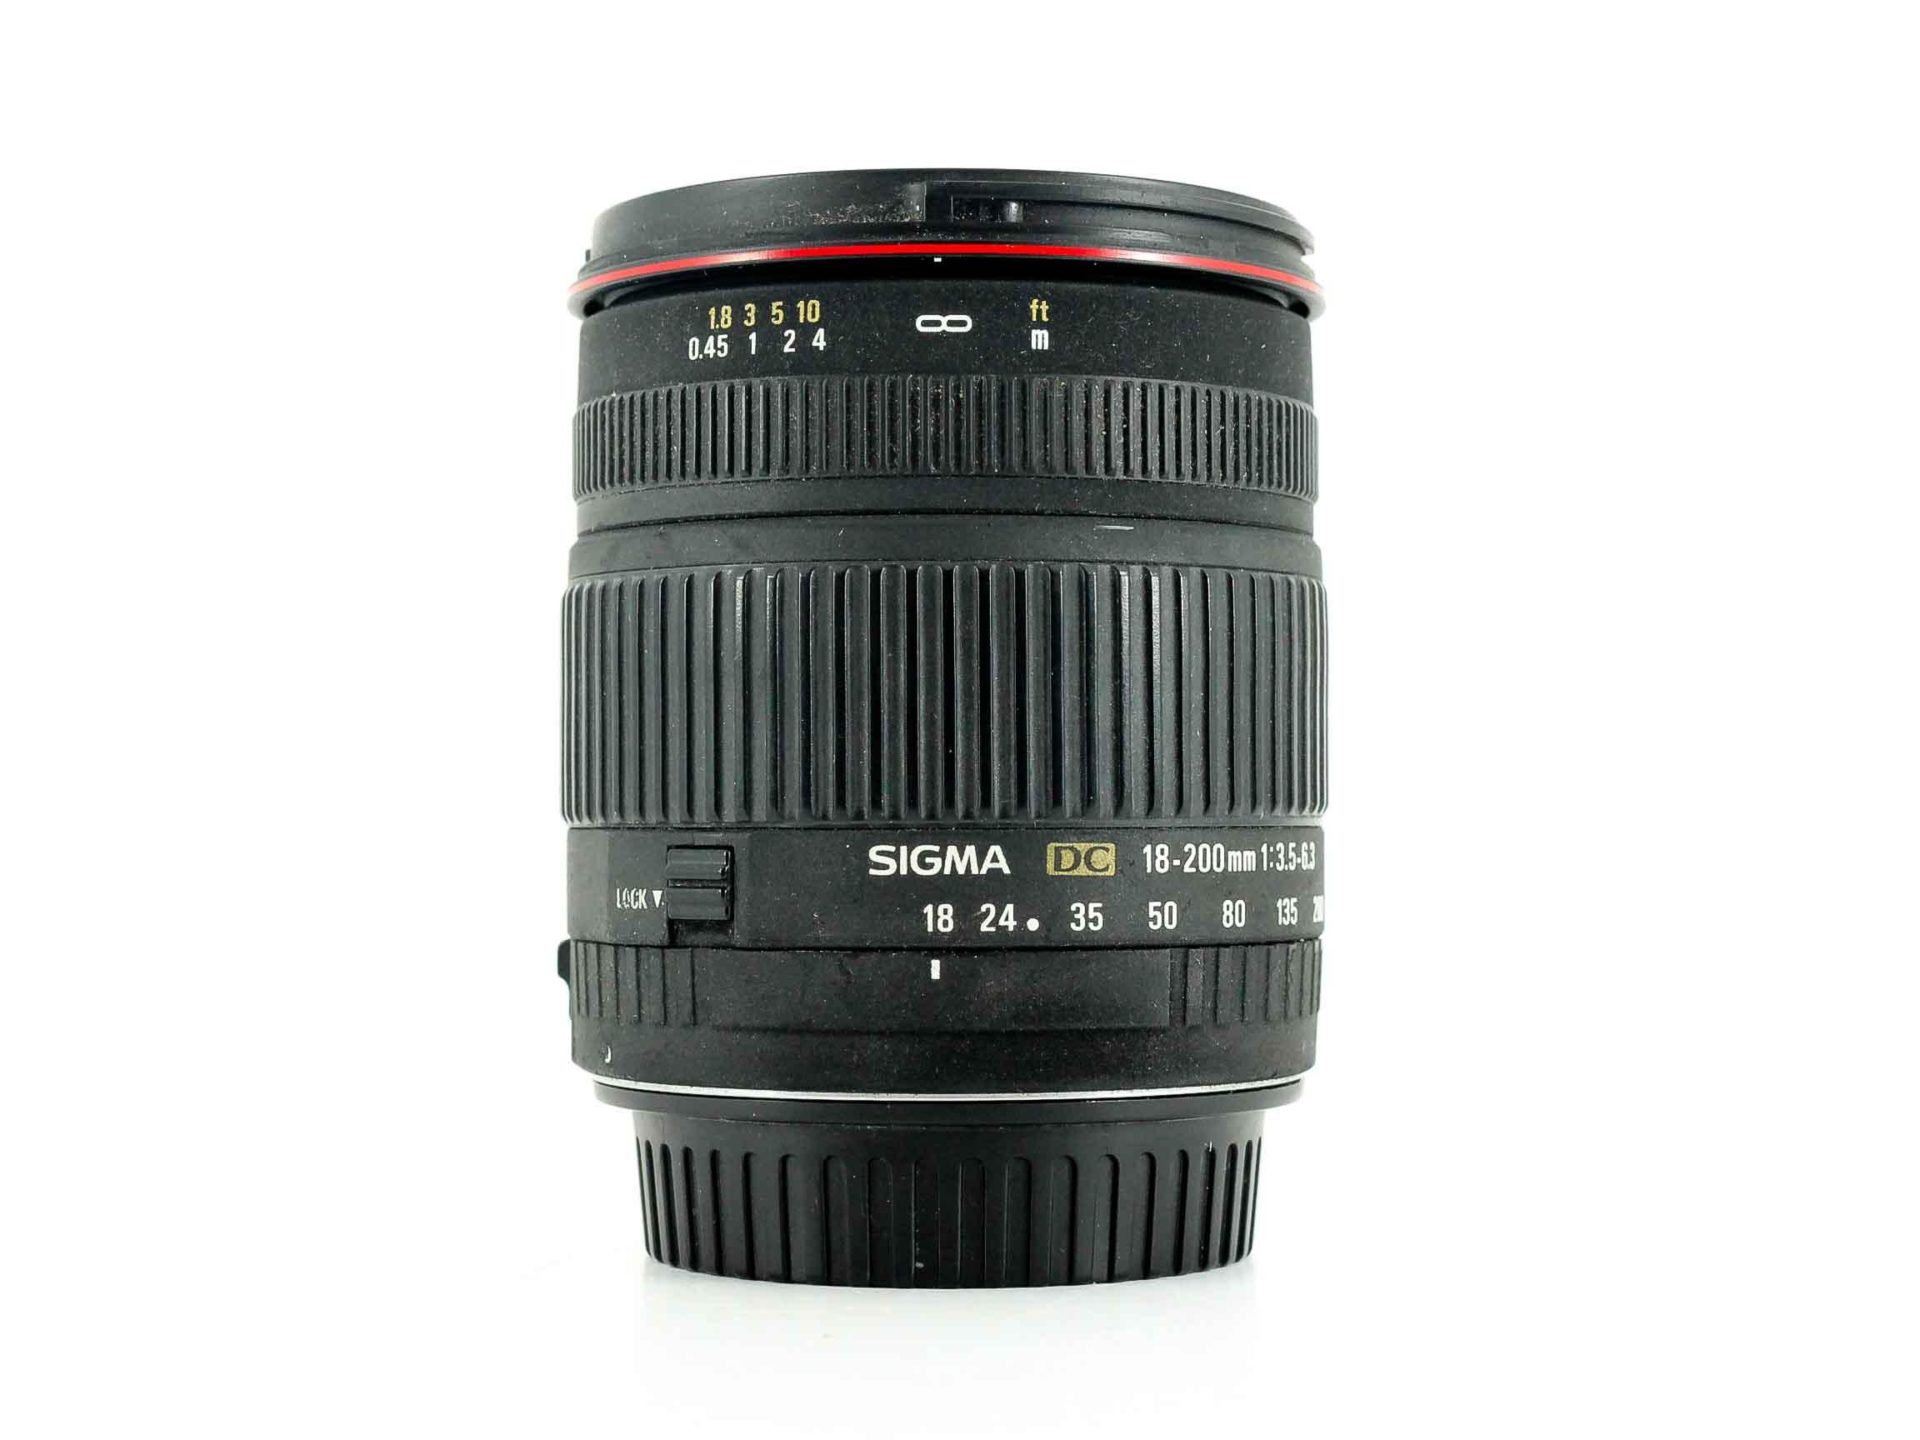 Sigma 18 f 3.5. Sigma 18-200mm. Sigma 18-200. Sigma 18-200mm 1:3.5-6.3 вс os HSM Nikon.